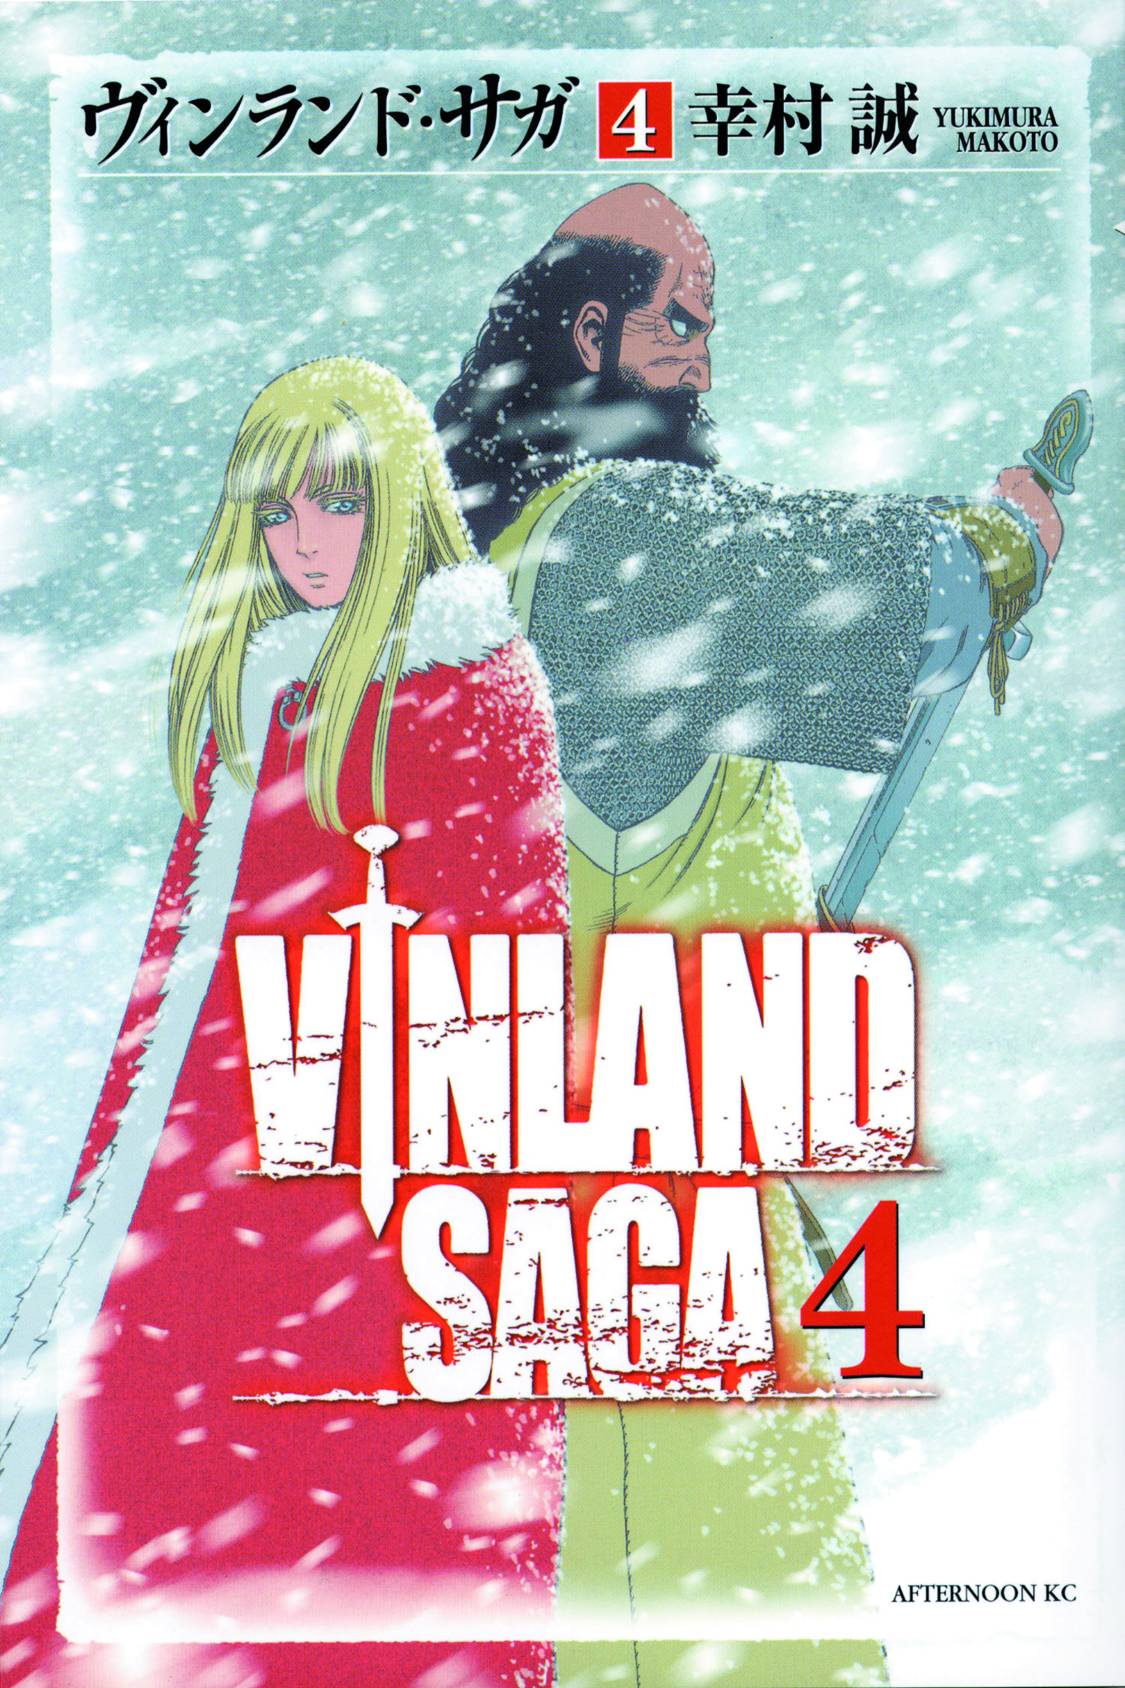 Vinland Saga: Vinland Saga 2 (Series #2) (Hardcover) 